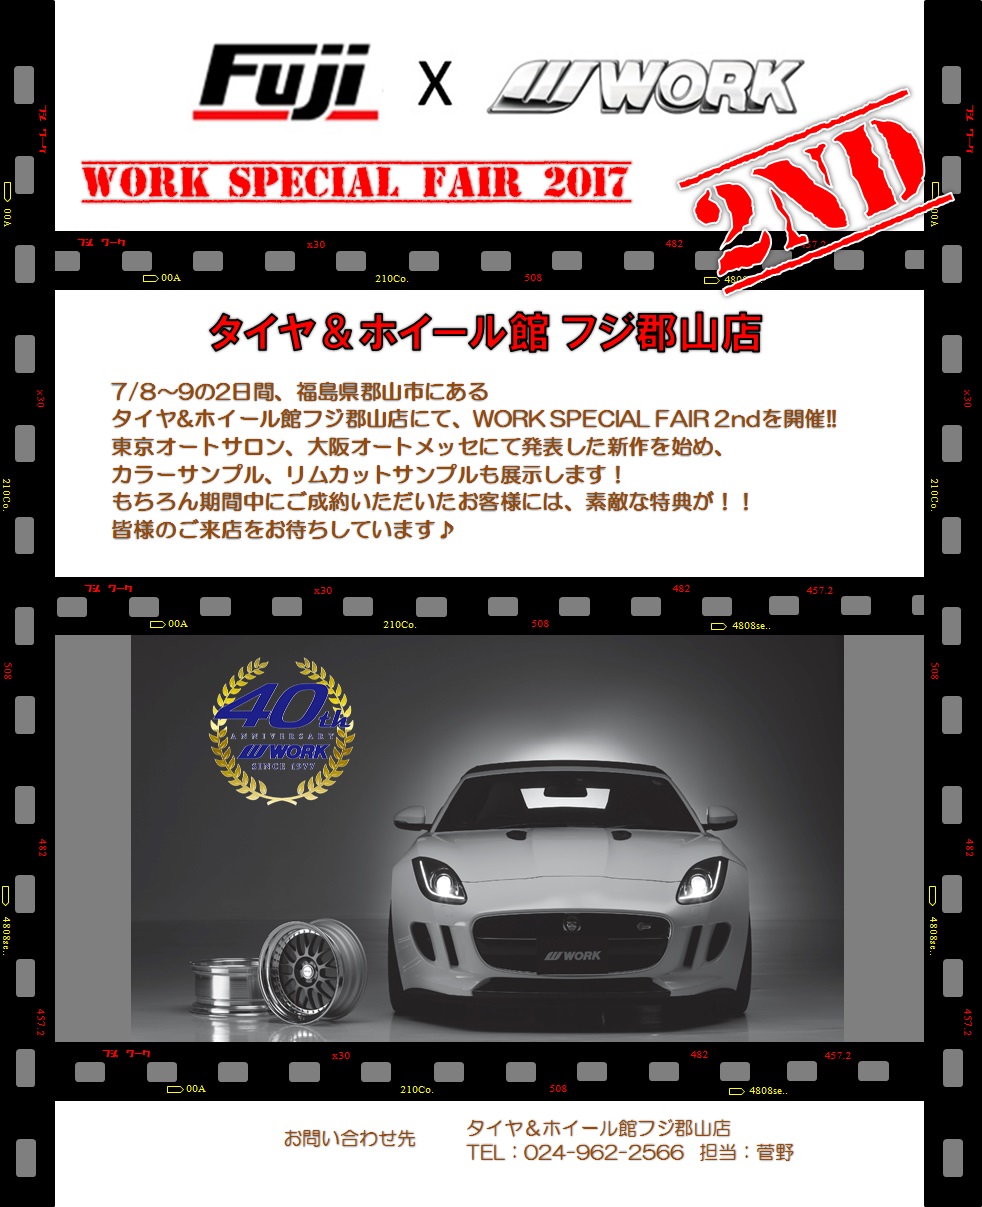 WORK SPECIAL FAIR 2017 2nd in Fuji Koriyama store